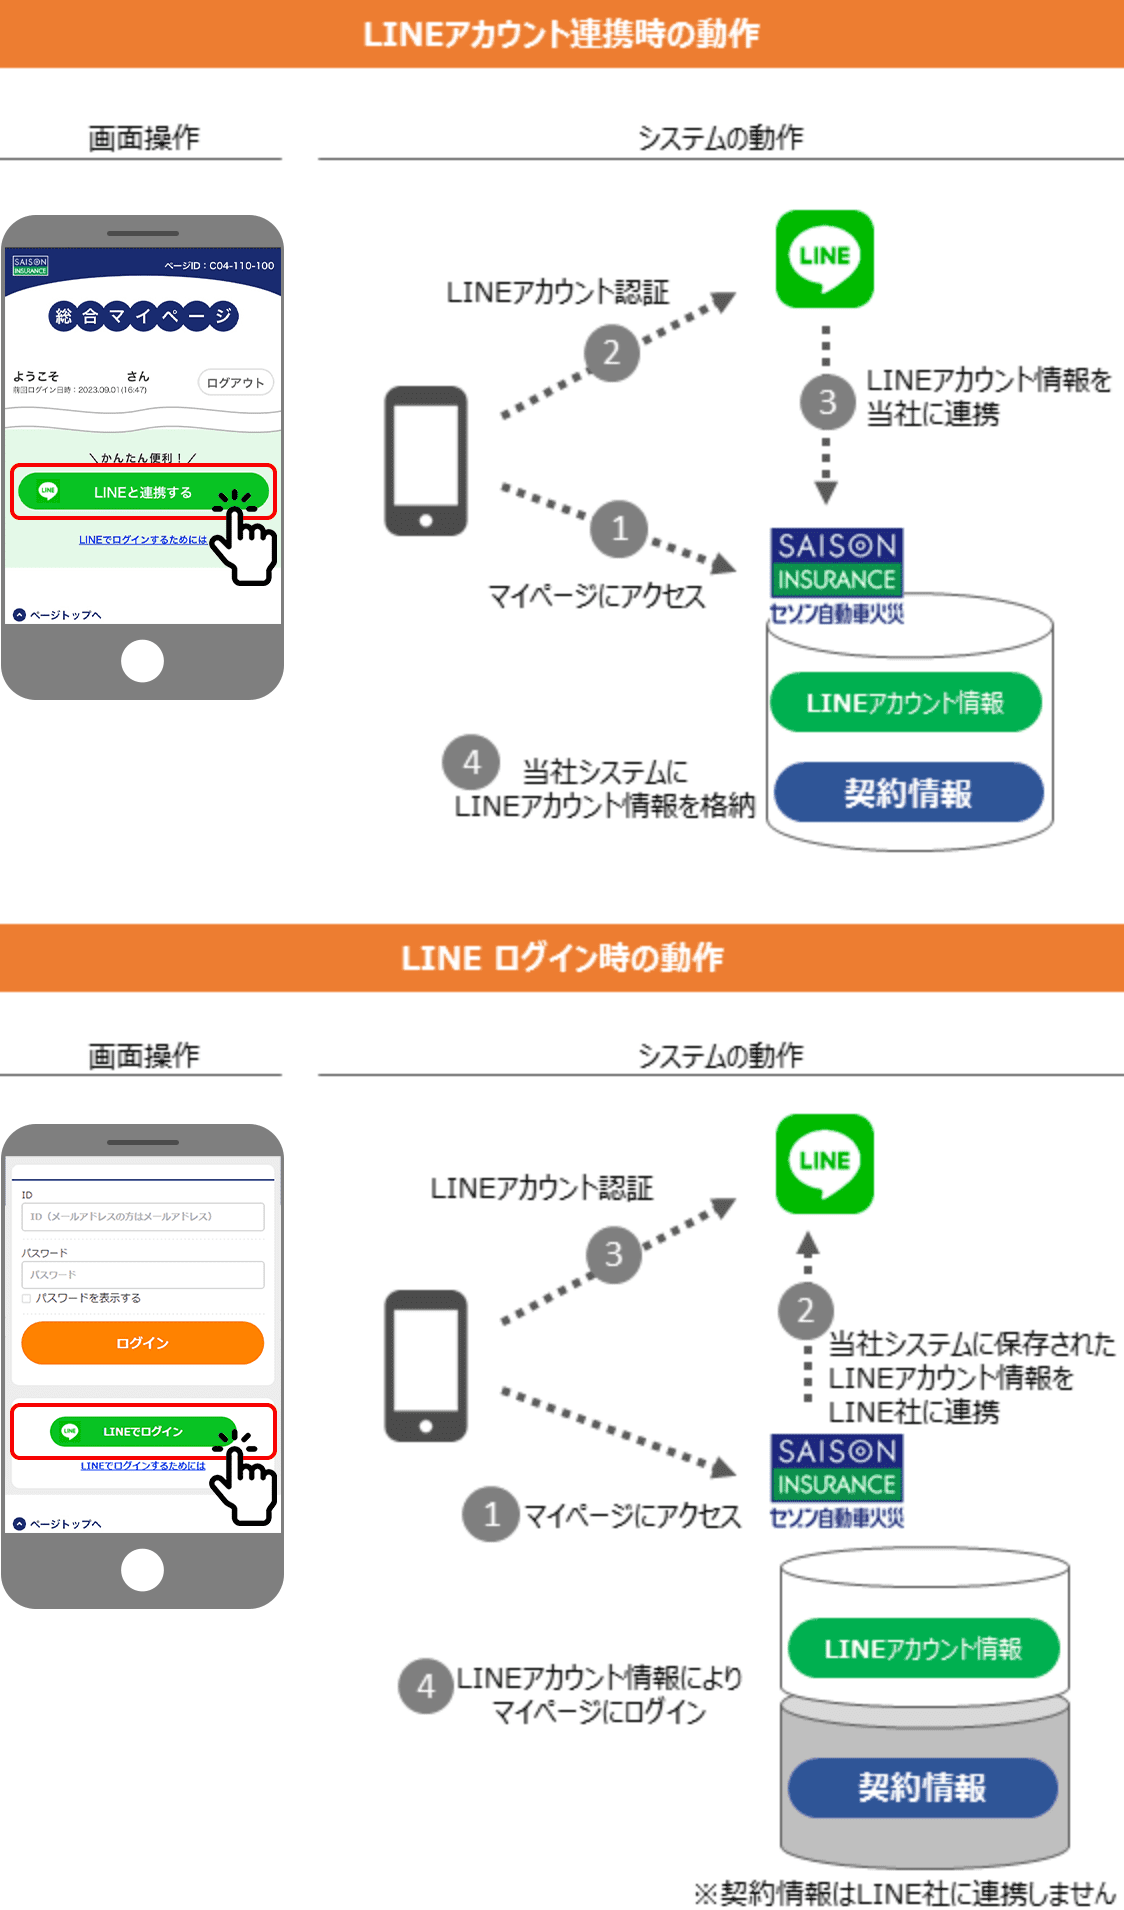 LINEアカウント連携時の動作とLINE ログイン時の動作の画面操作とシステムの動作図